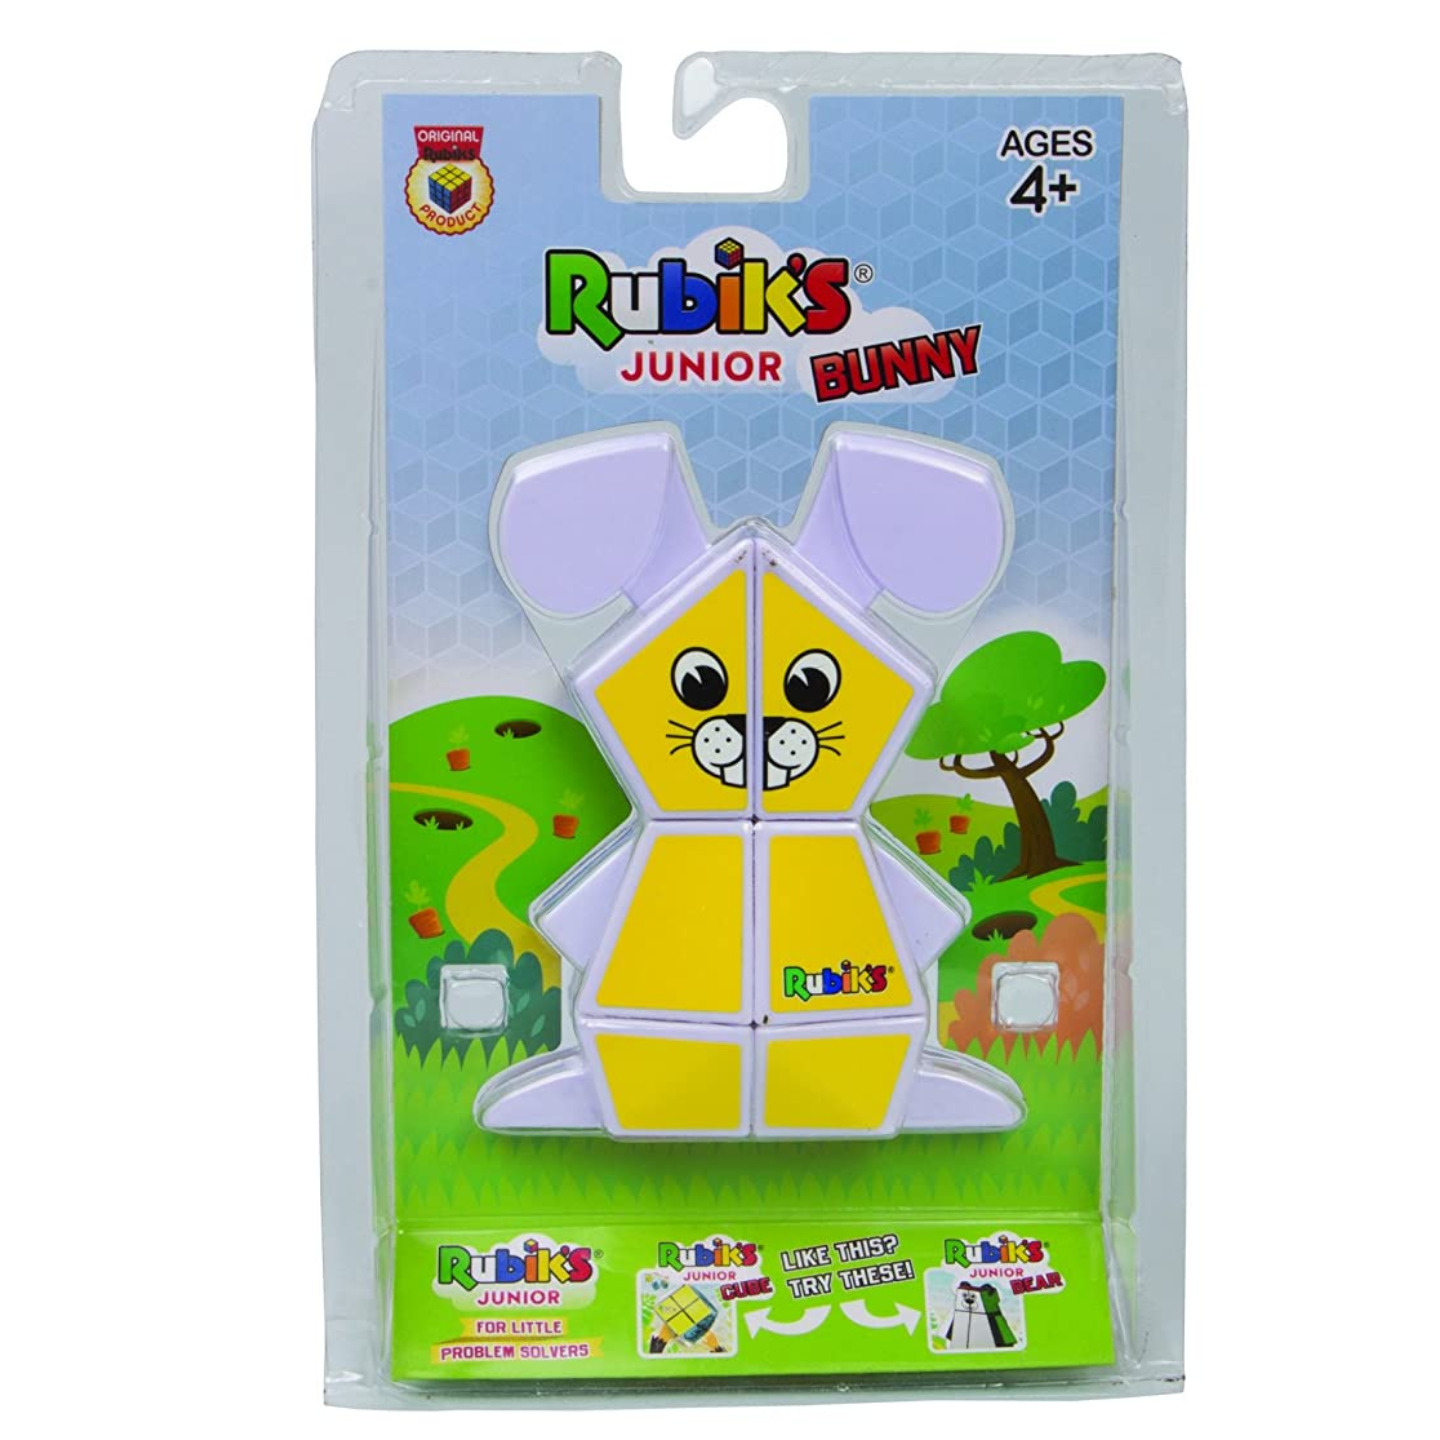 Funskool Rubiks Junior Cube - Bunny age - 4+